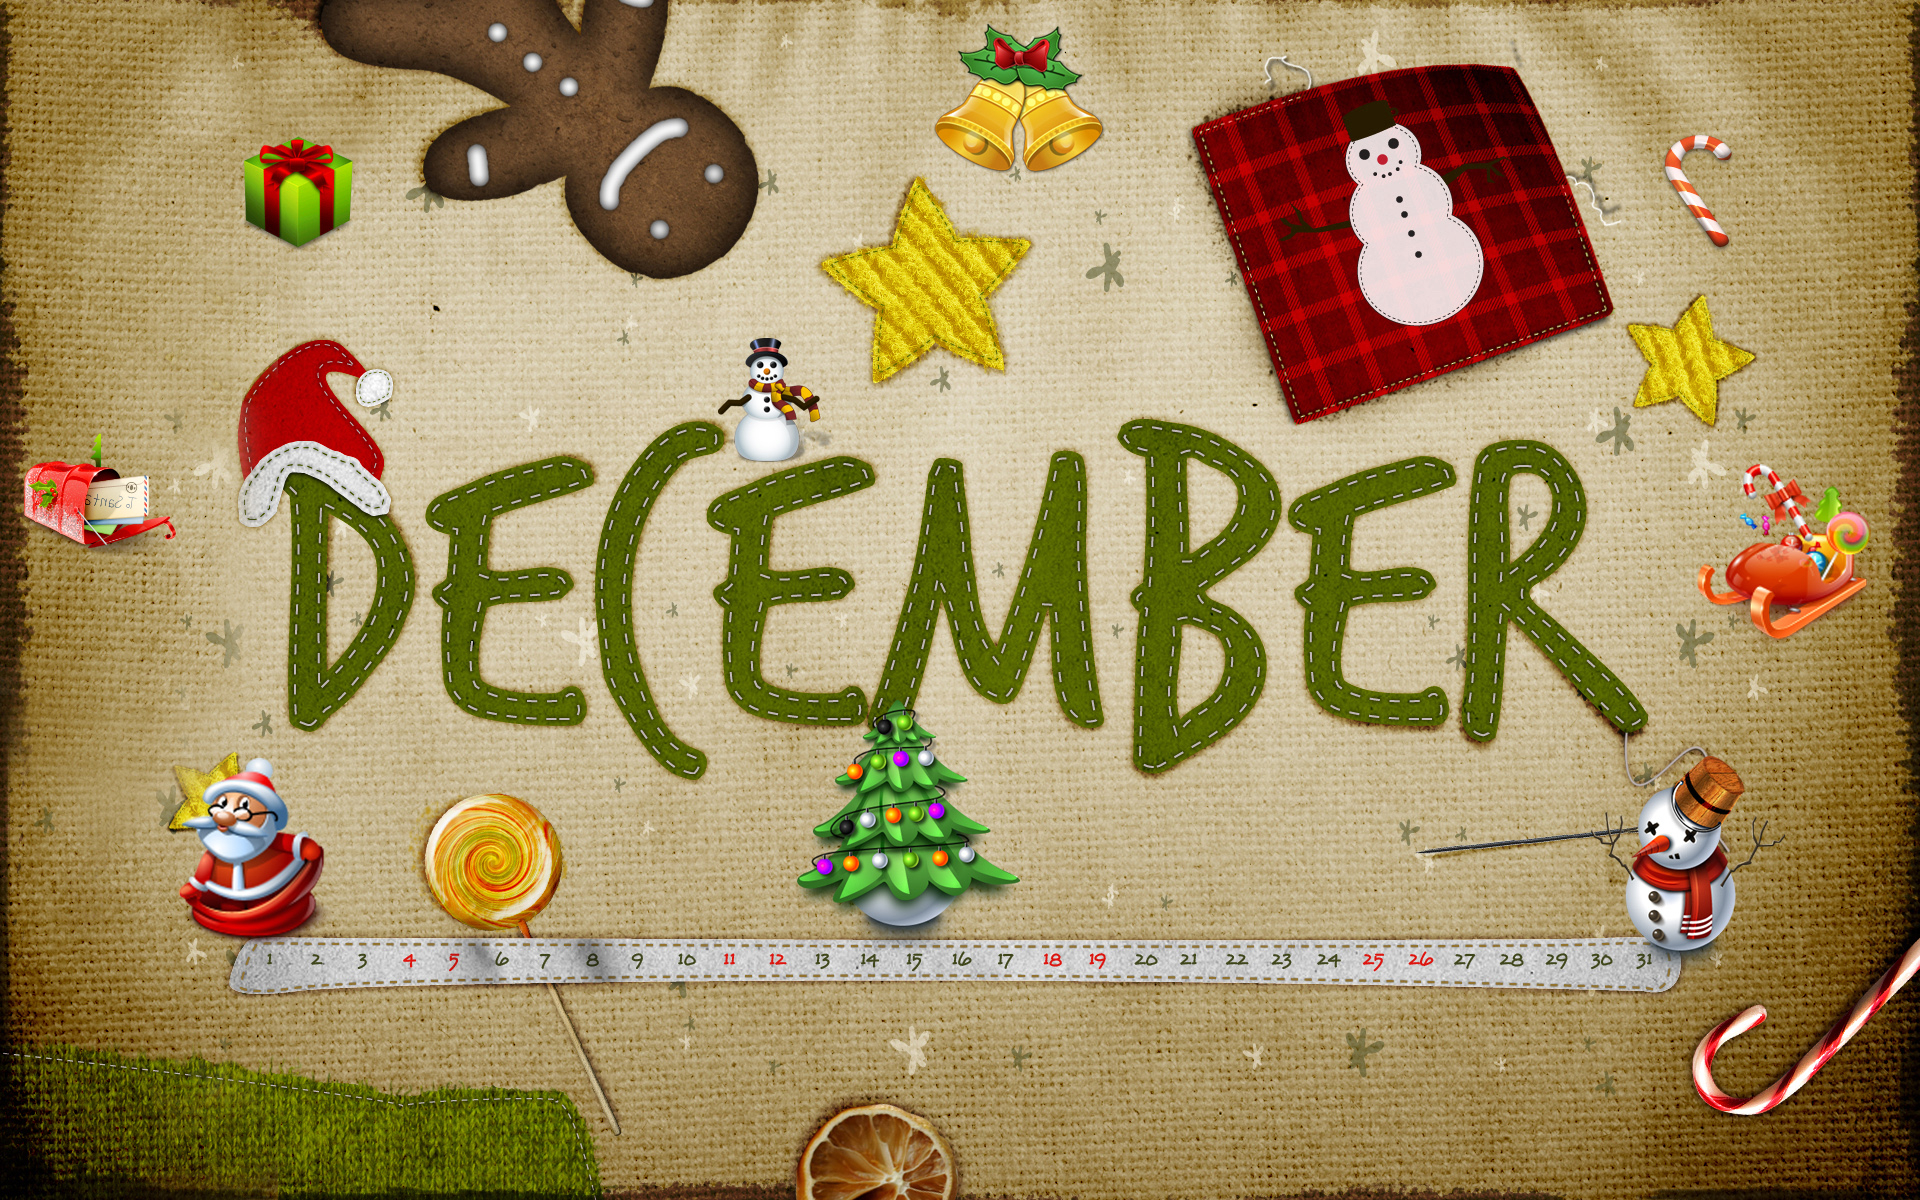 Wallpapers screensaver December month on the desktop